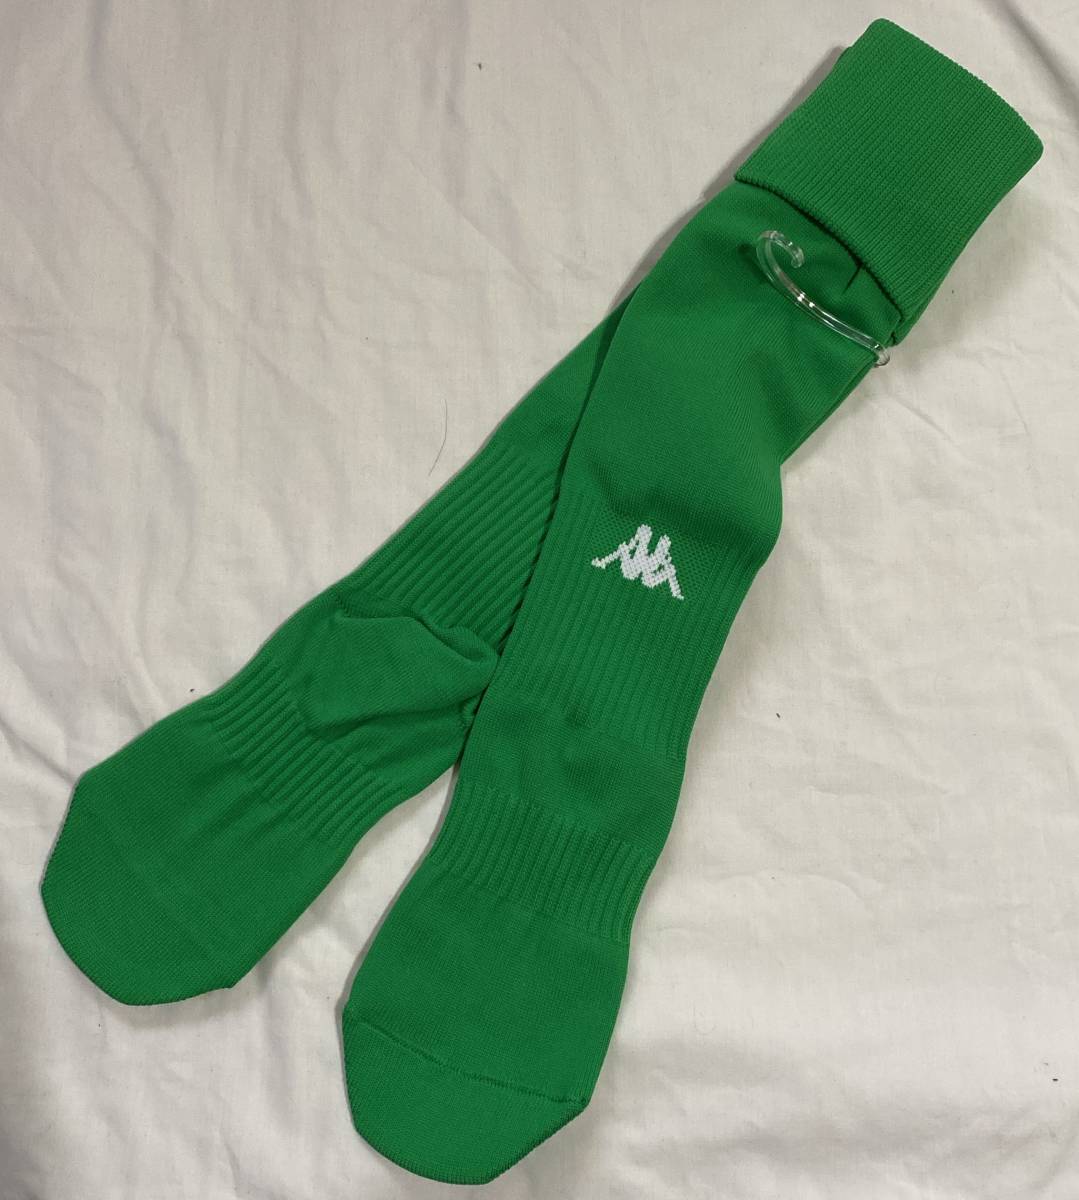  soccer socks 6 pair 19~21cm Kappa Kappa Junior for children green group stockings 6 pair 9.900 jpy goods /6 pair set sale ^v made in Japan 